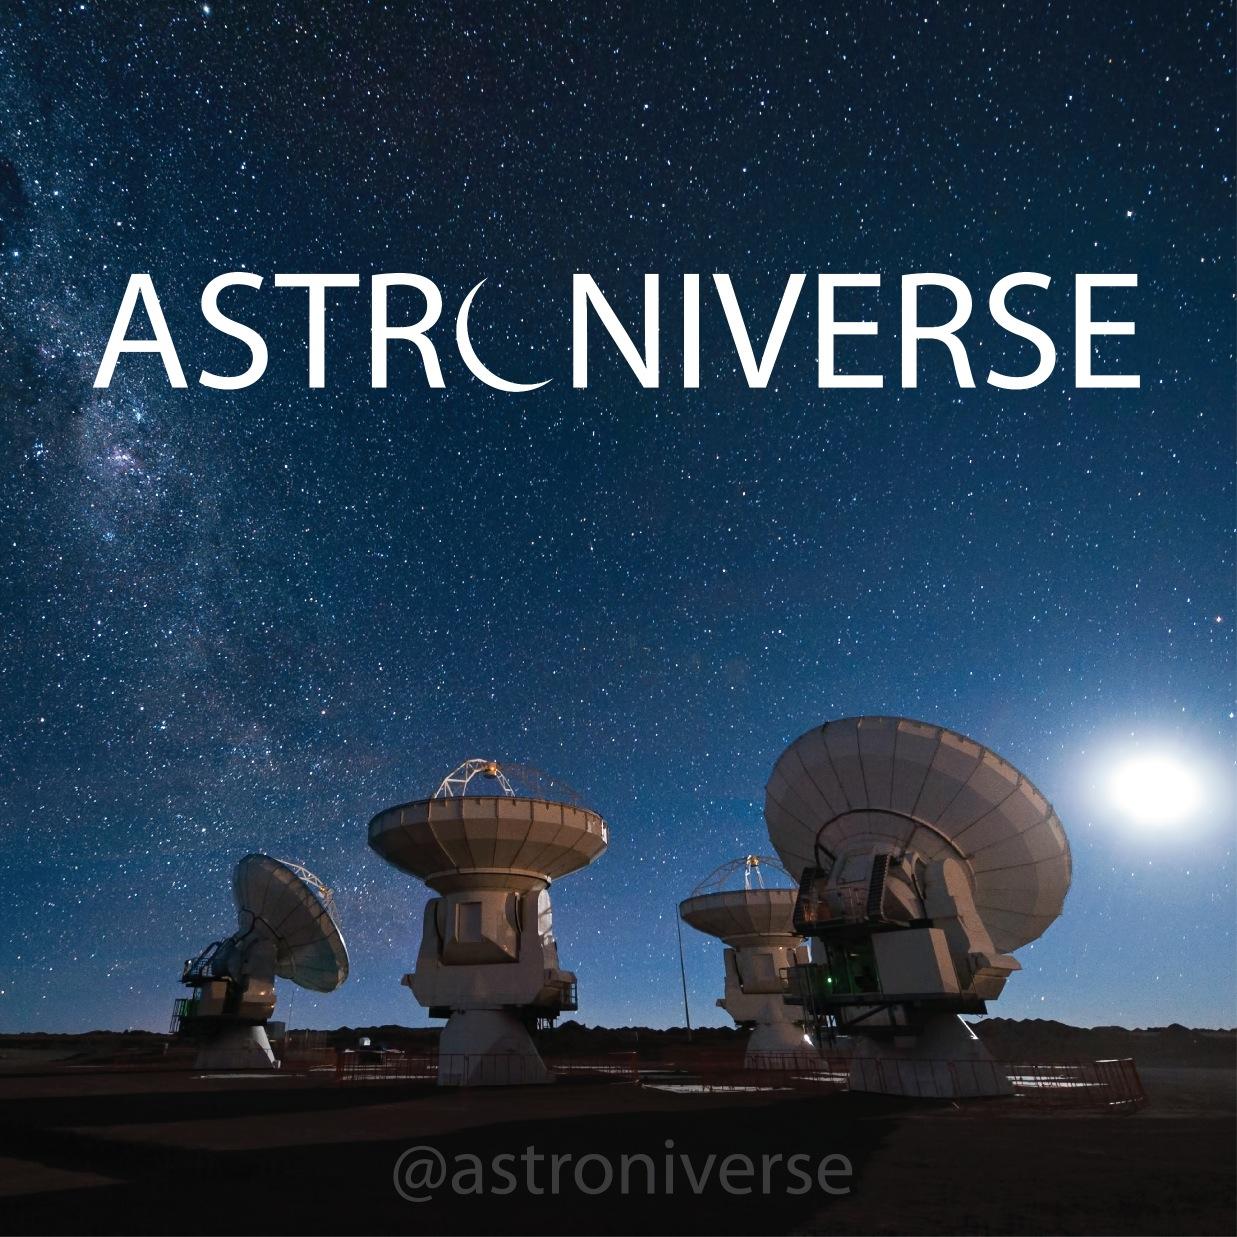 Astroniverse